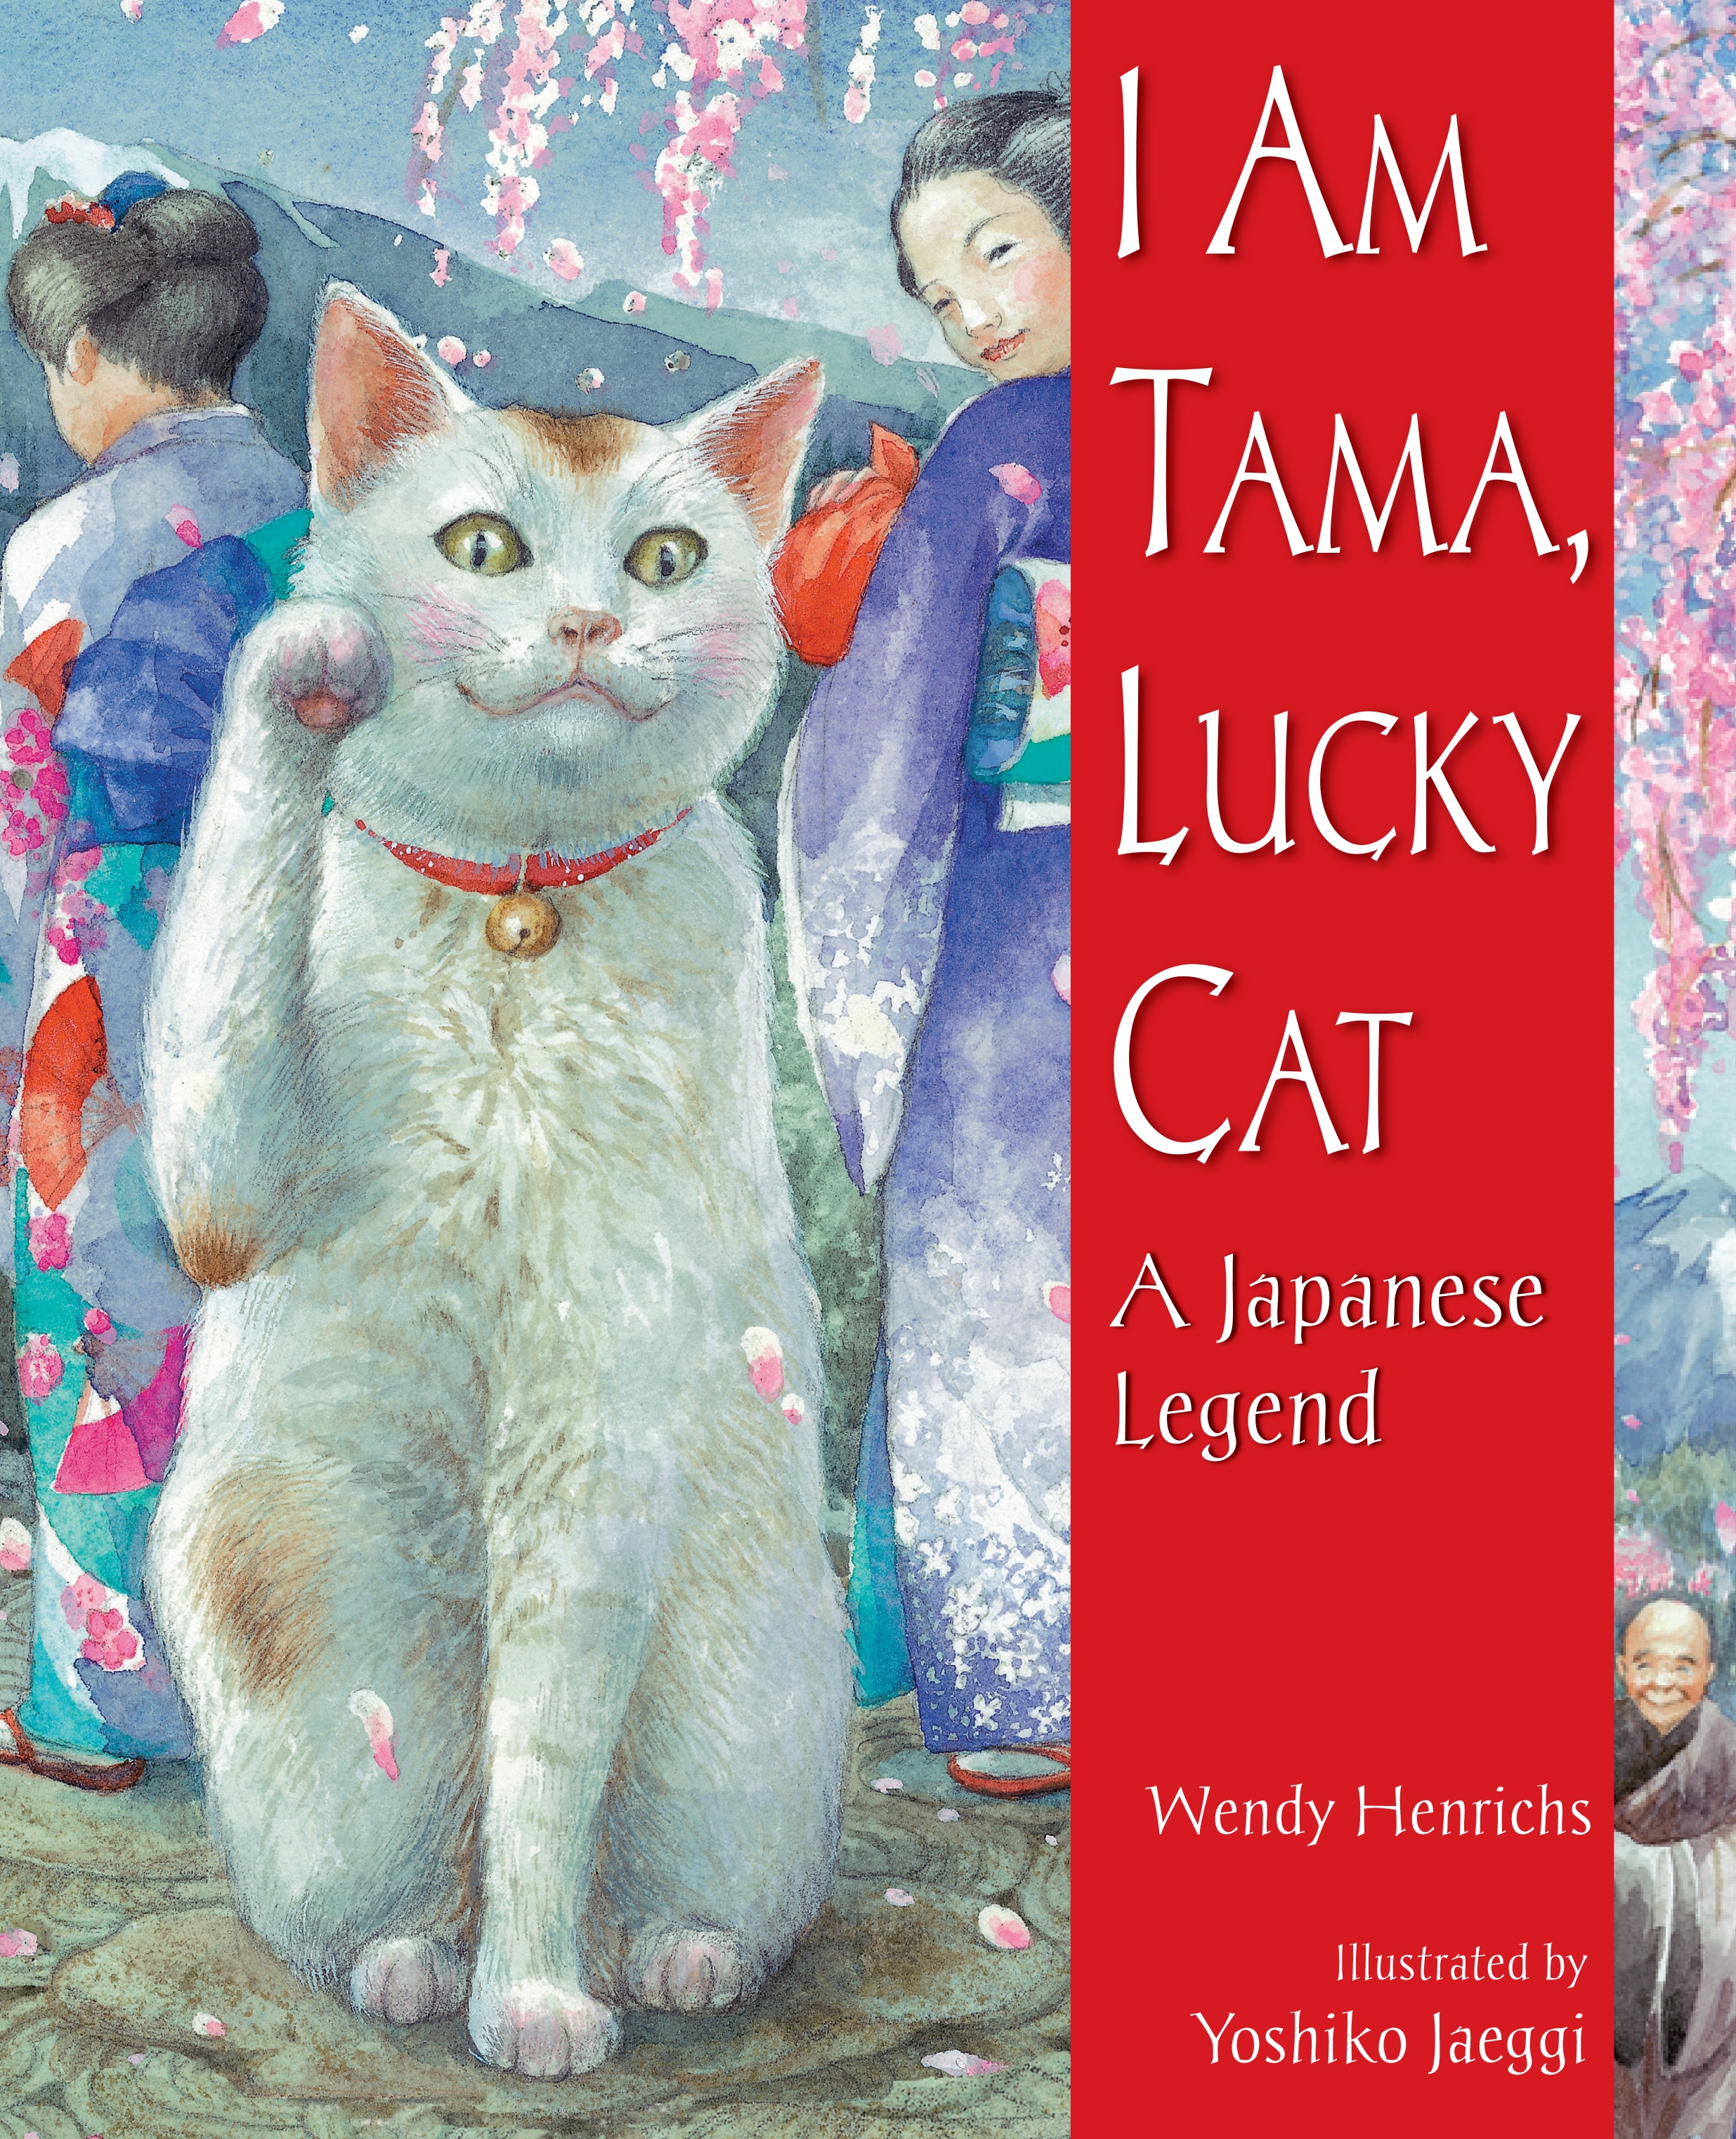 I Am Tama, Lucky Cat by Wendy Henrichs - Penguin Books Australia